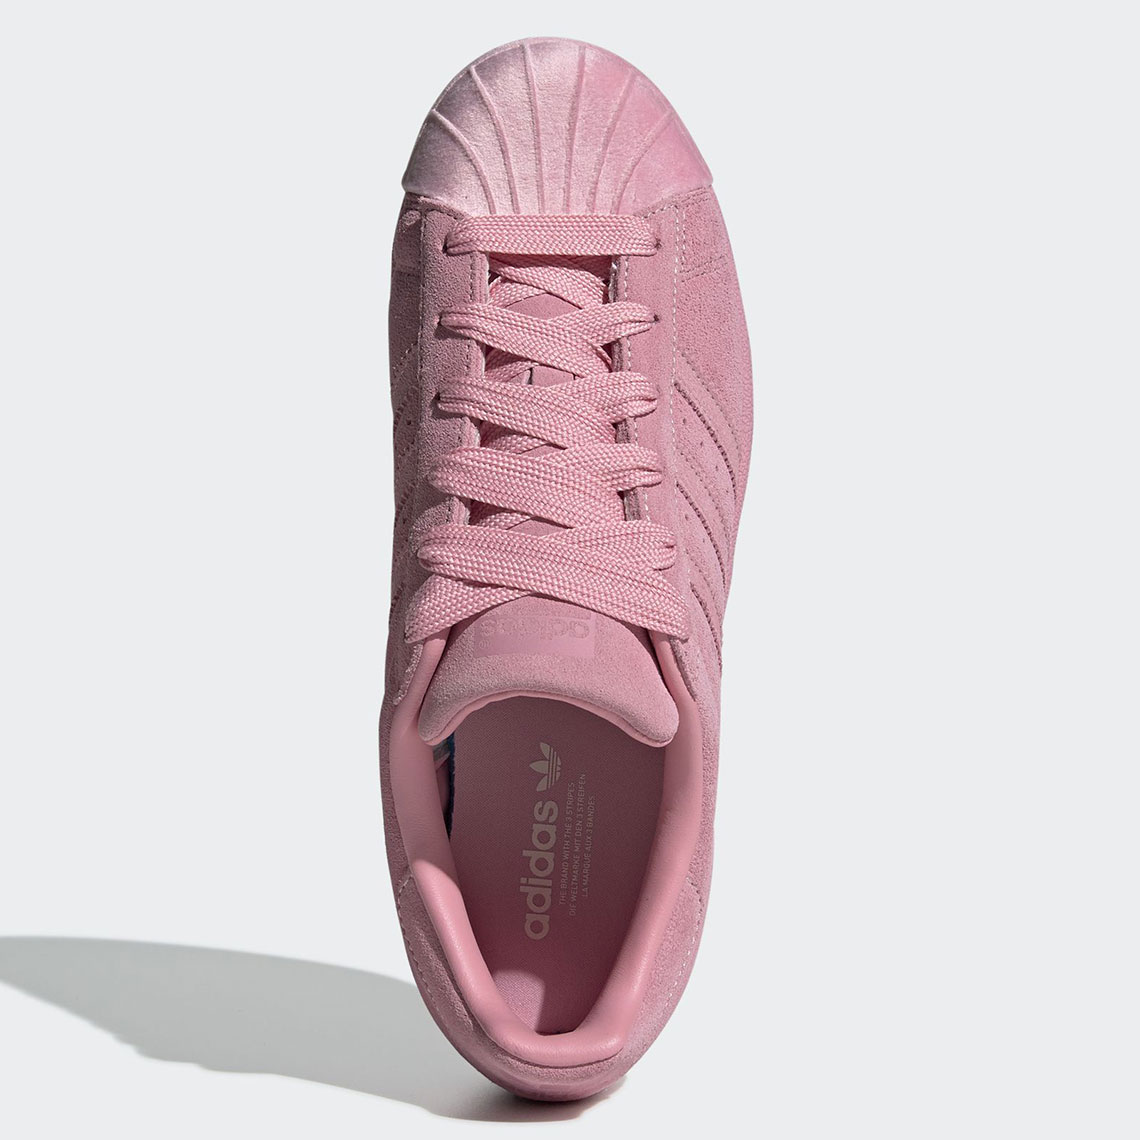 Adidas Superstar Pink Cg6004 2